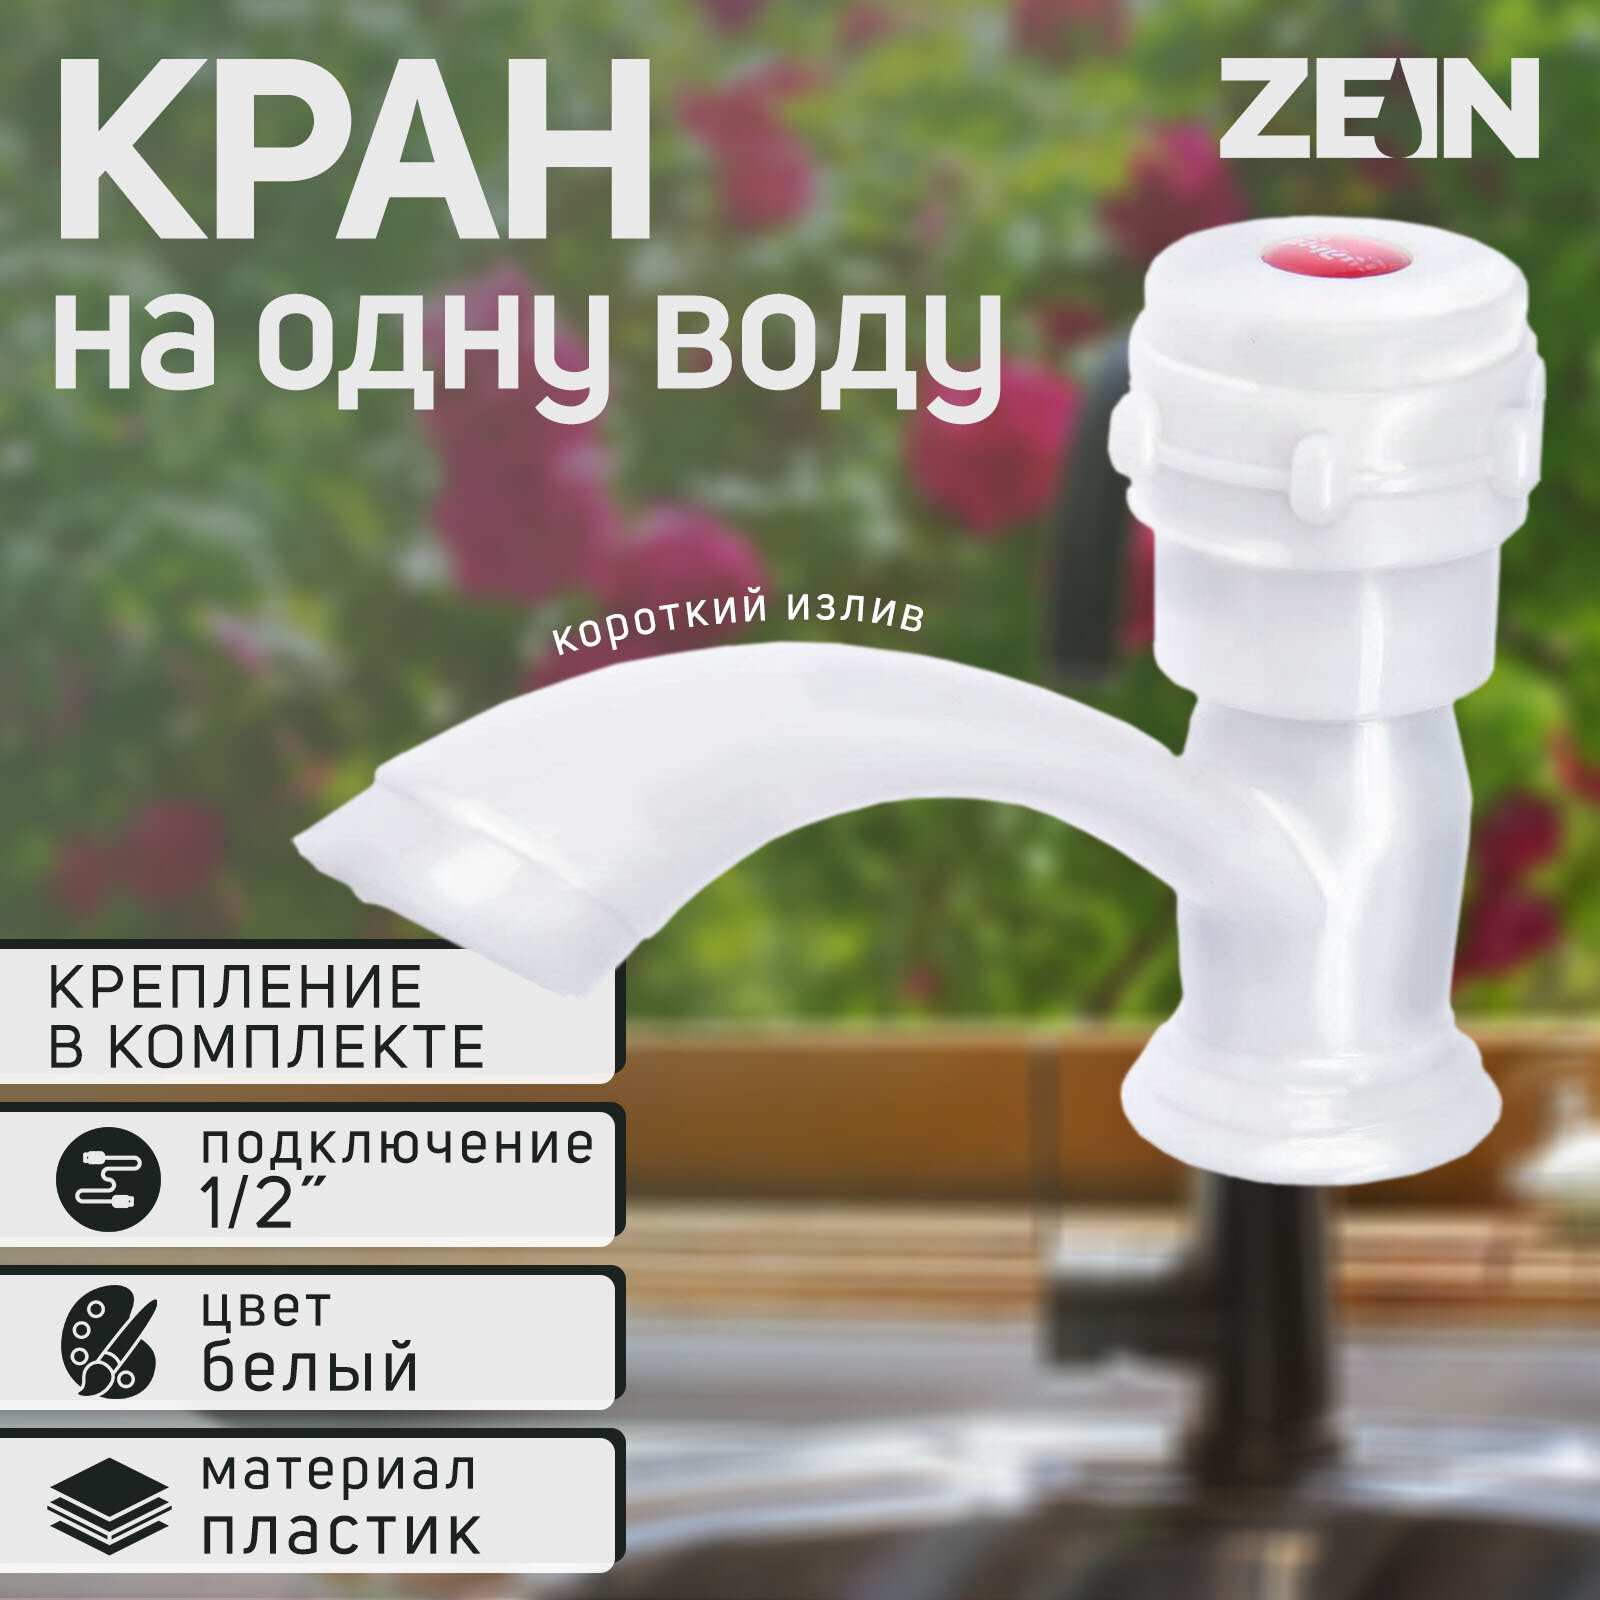 Кран на одну воду ZEIN Z2022, круглая ручка, пластик, короткий излив, белый (1шт.)